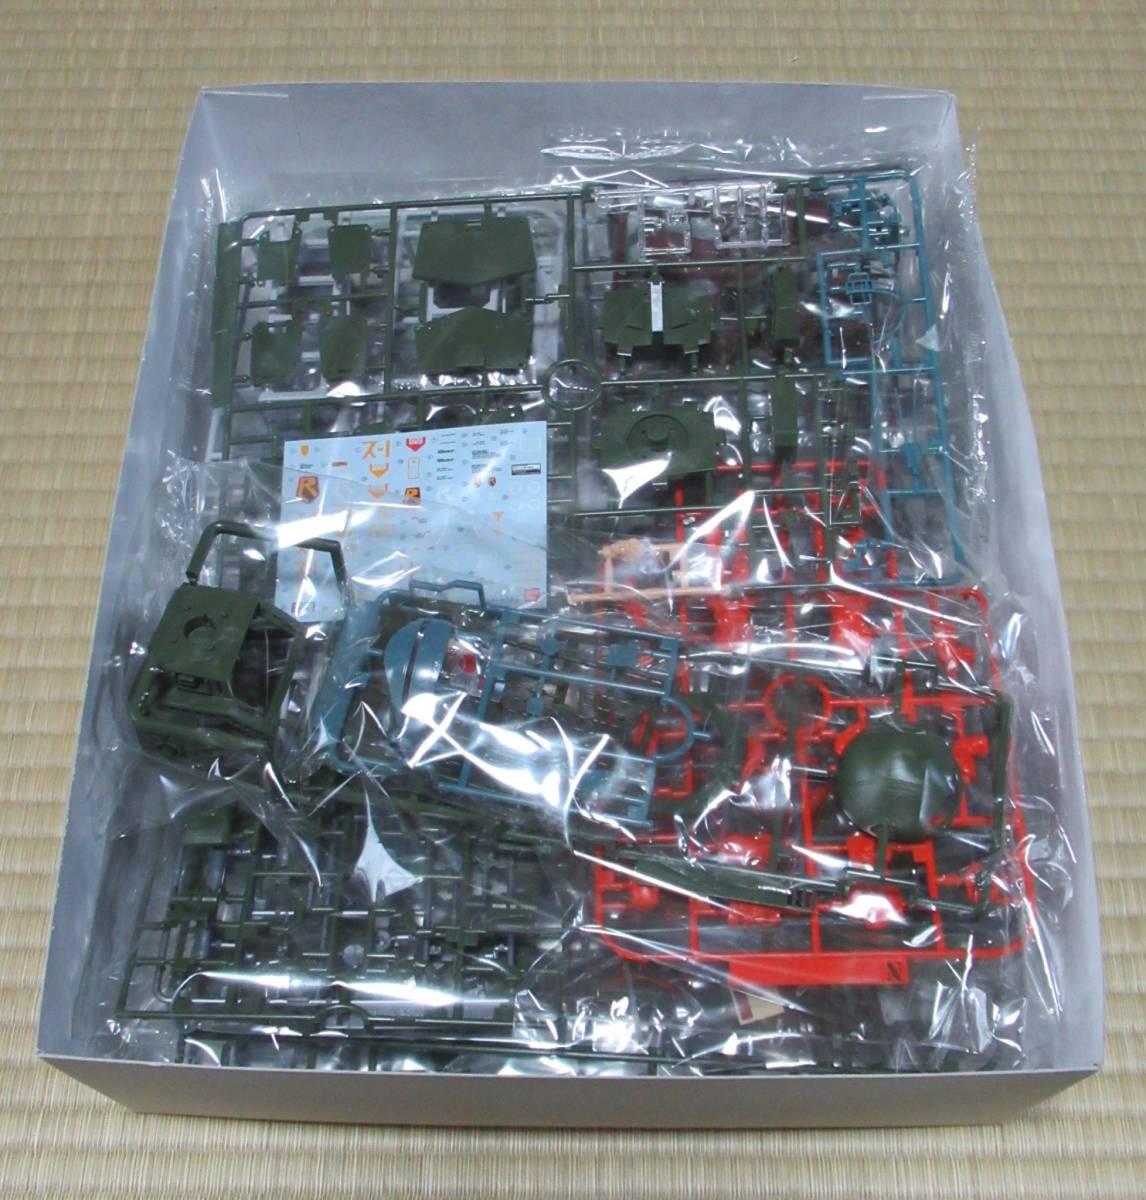 * new goods plastic model Armored Trooper Votoms 1/20 [ scope dog red shoulder custom ]